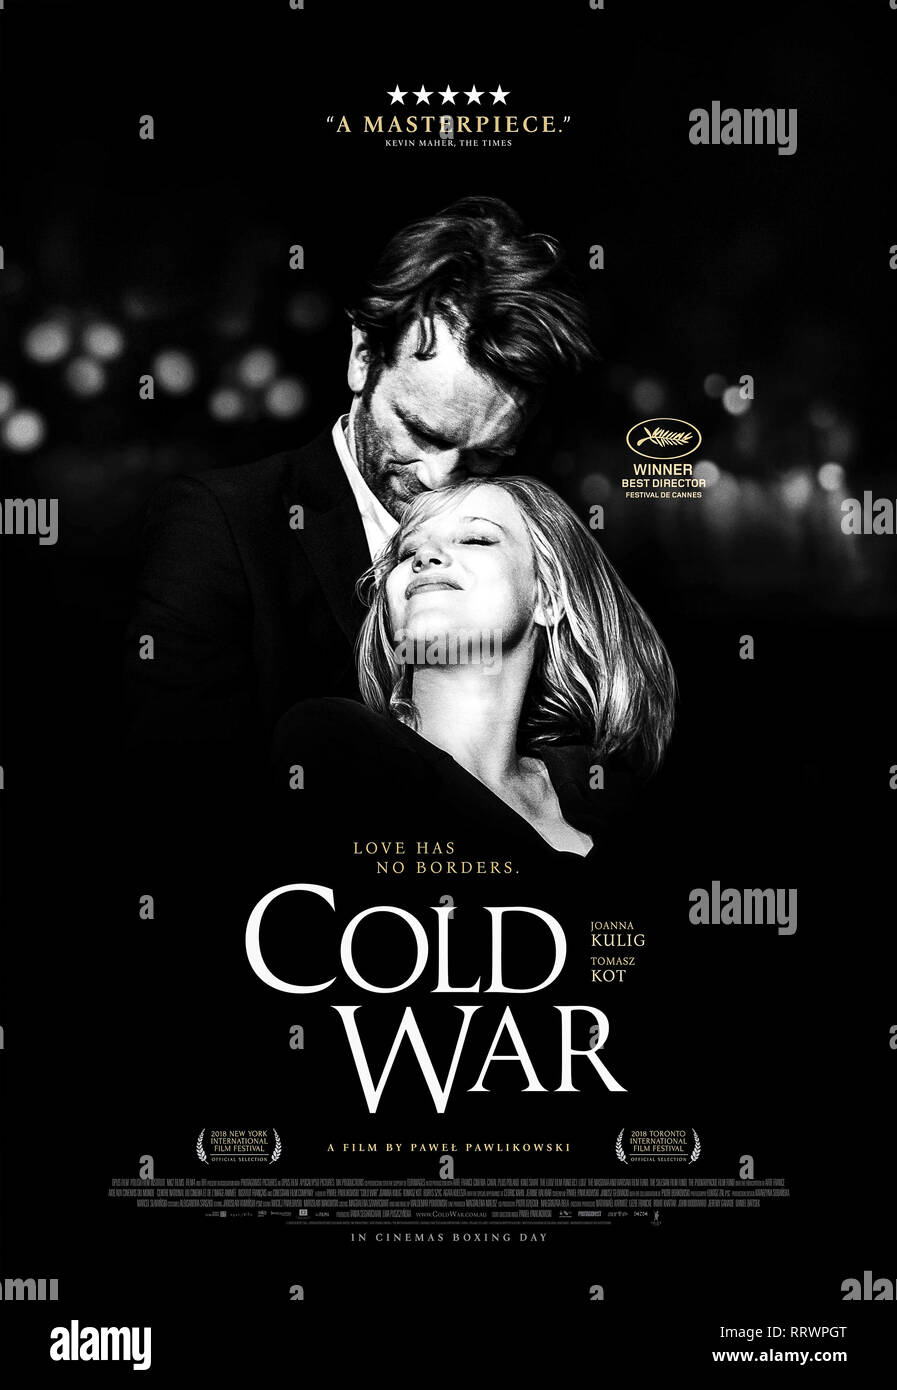 Cold War (Zimna wojna) (2018) directed by Pawel Pawlikowski and starring Joanna Kulig, Tomasz Kot and Borys Szyc. Stock Photo